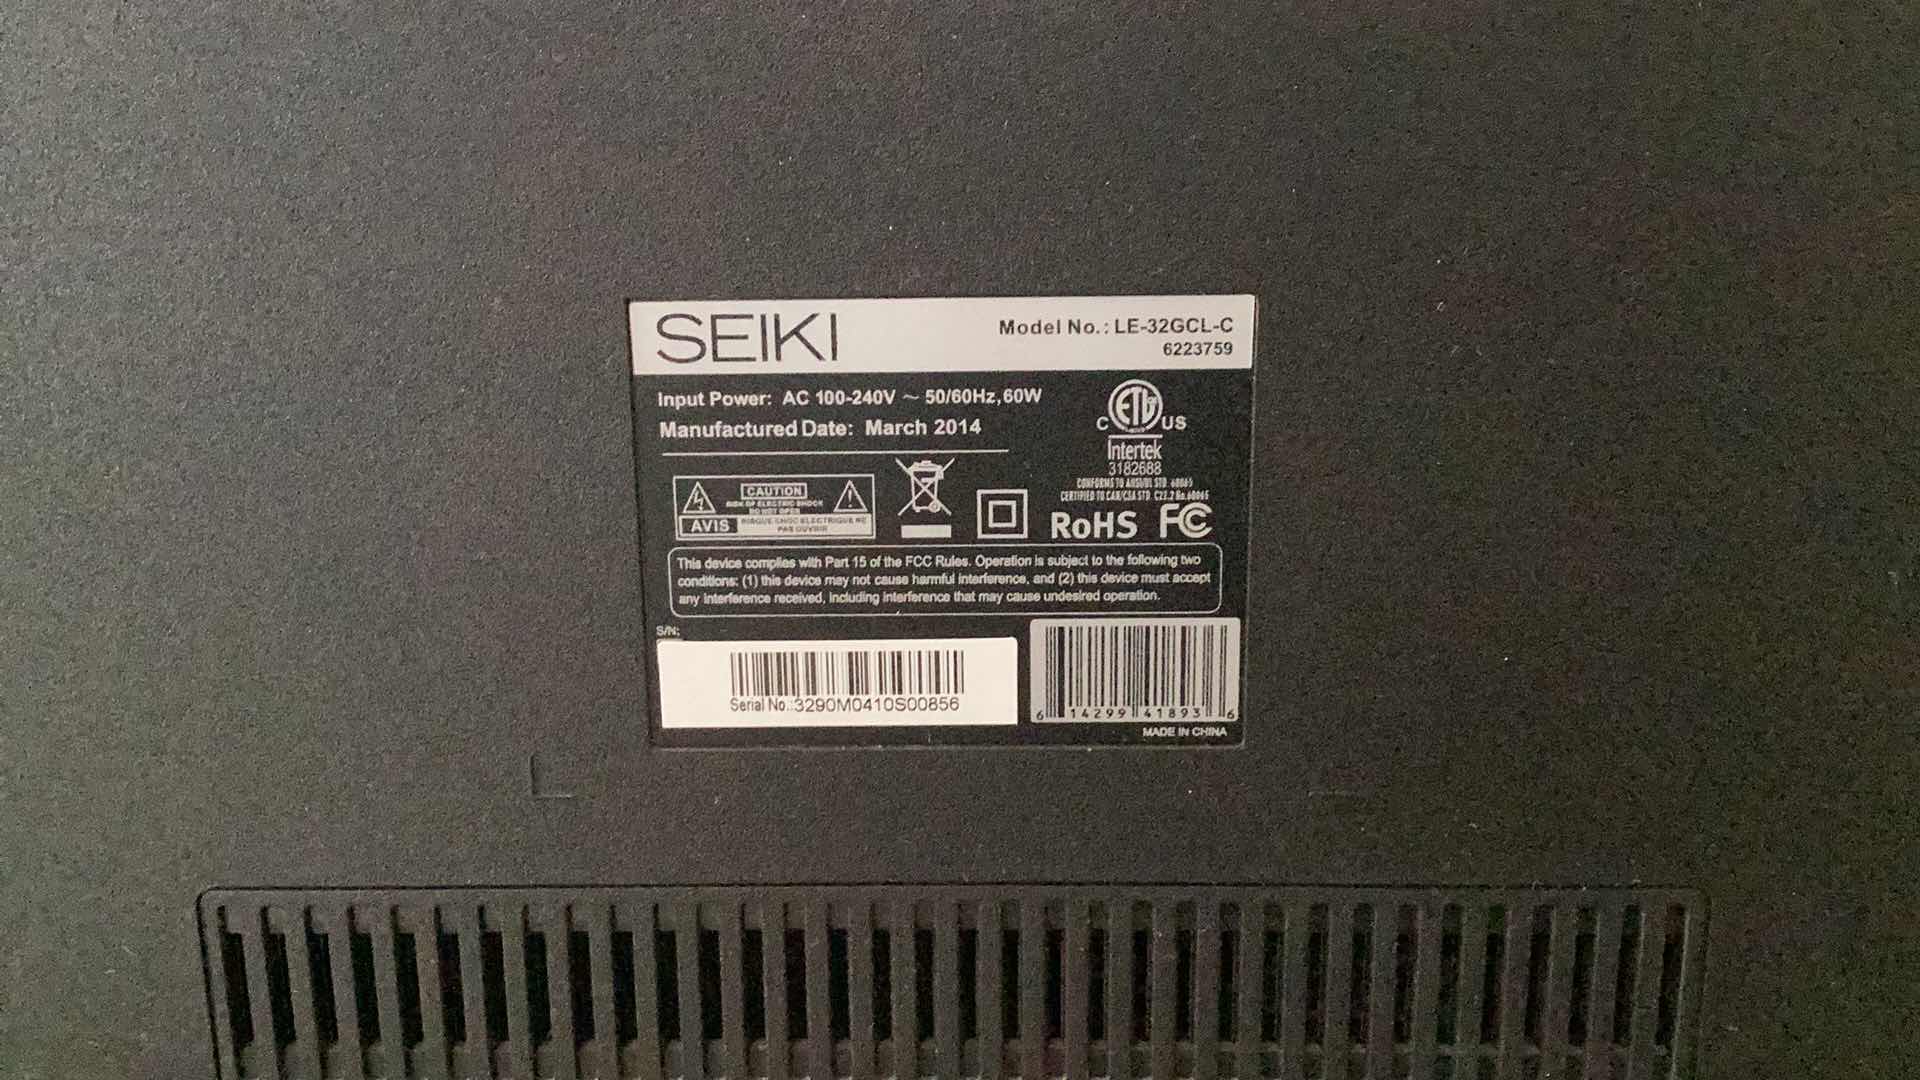 Photo 3 of SEIKI ROKU 32” TV WITH REMOTE